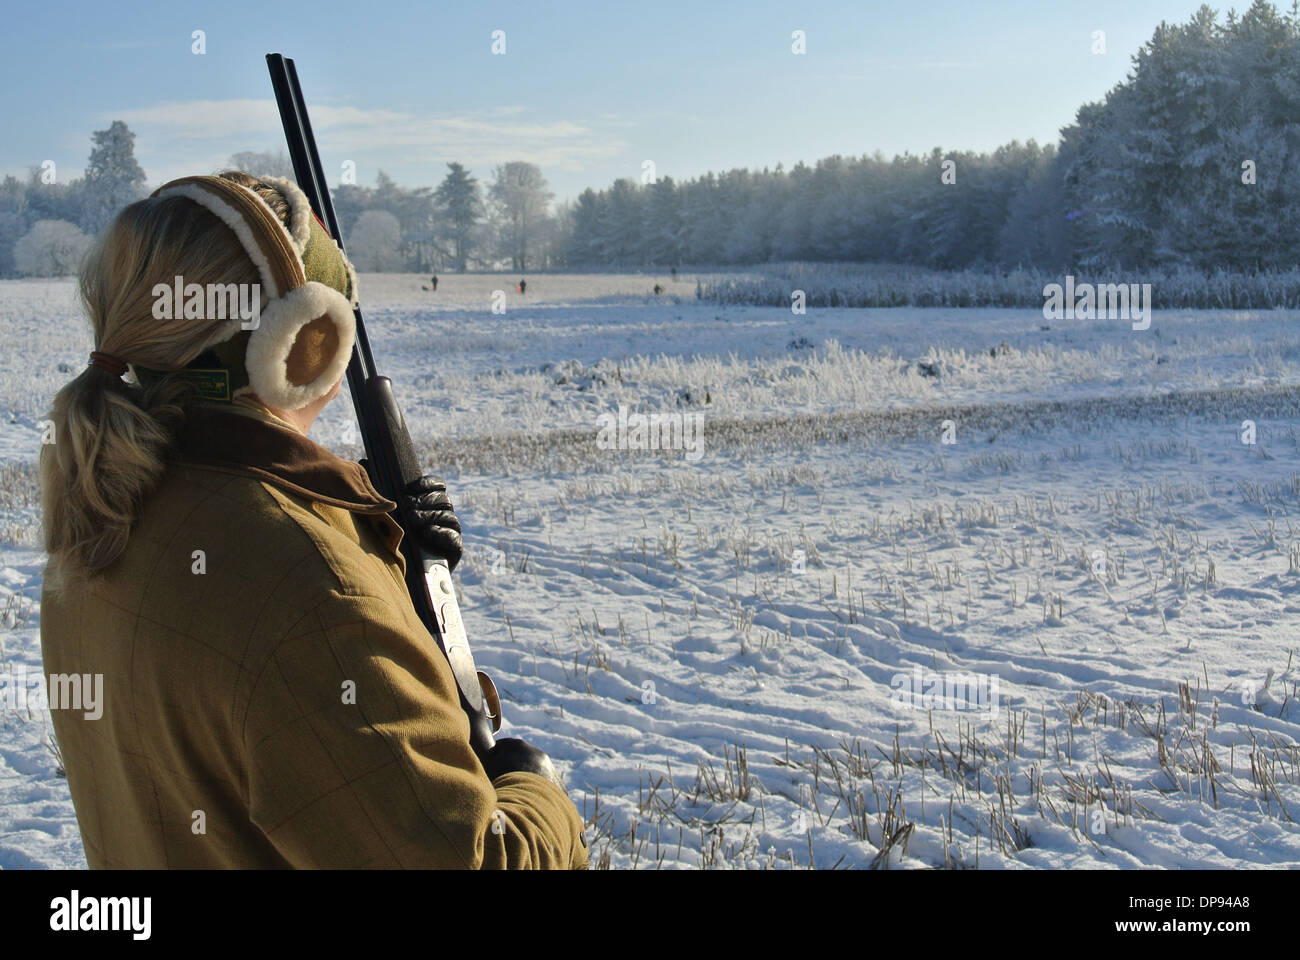 Snow gun hi-res stock photography and images - Alamy